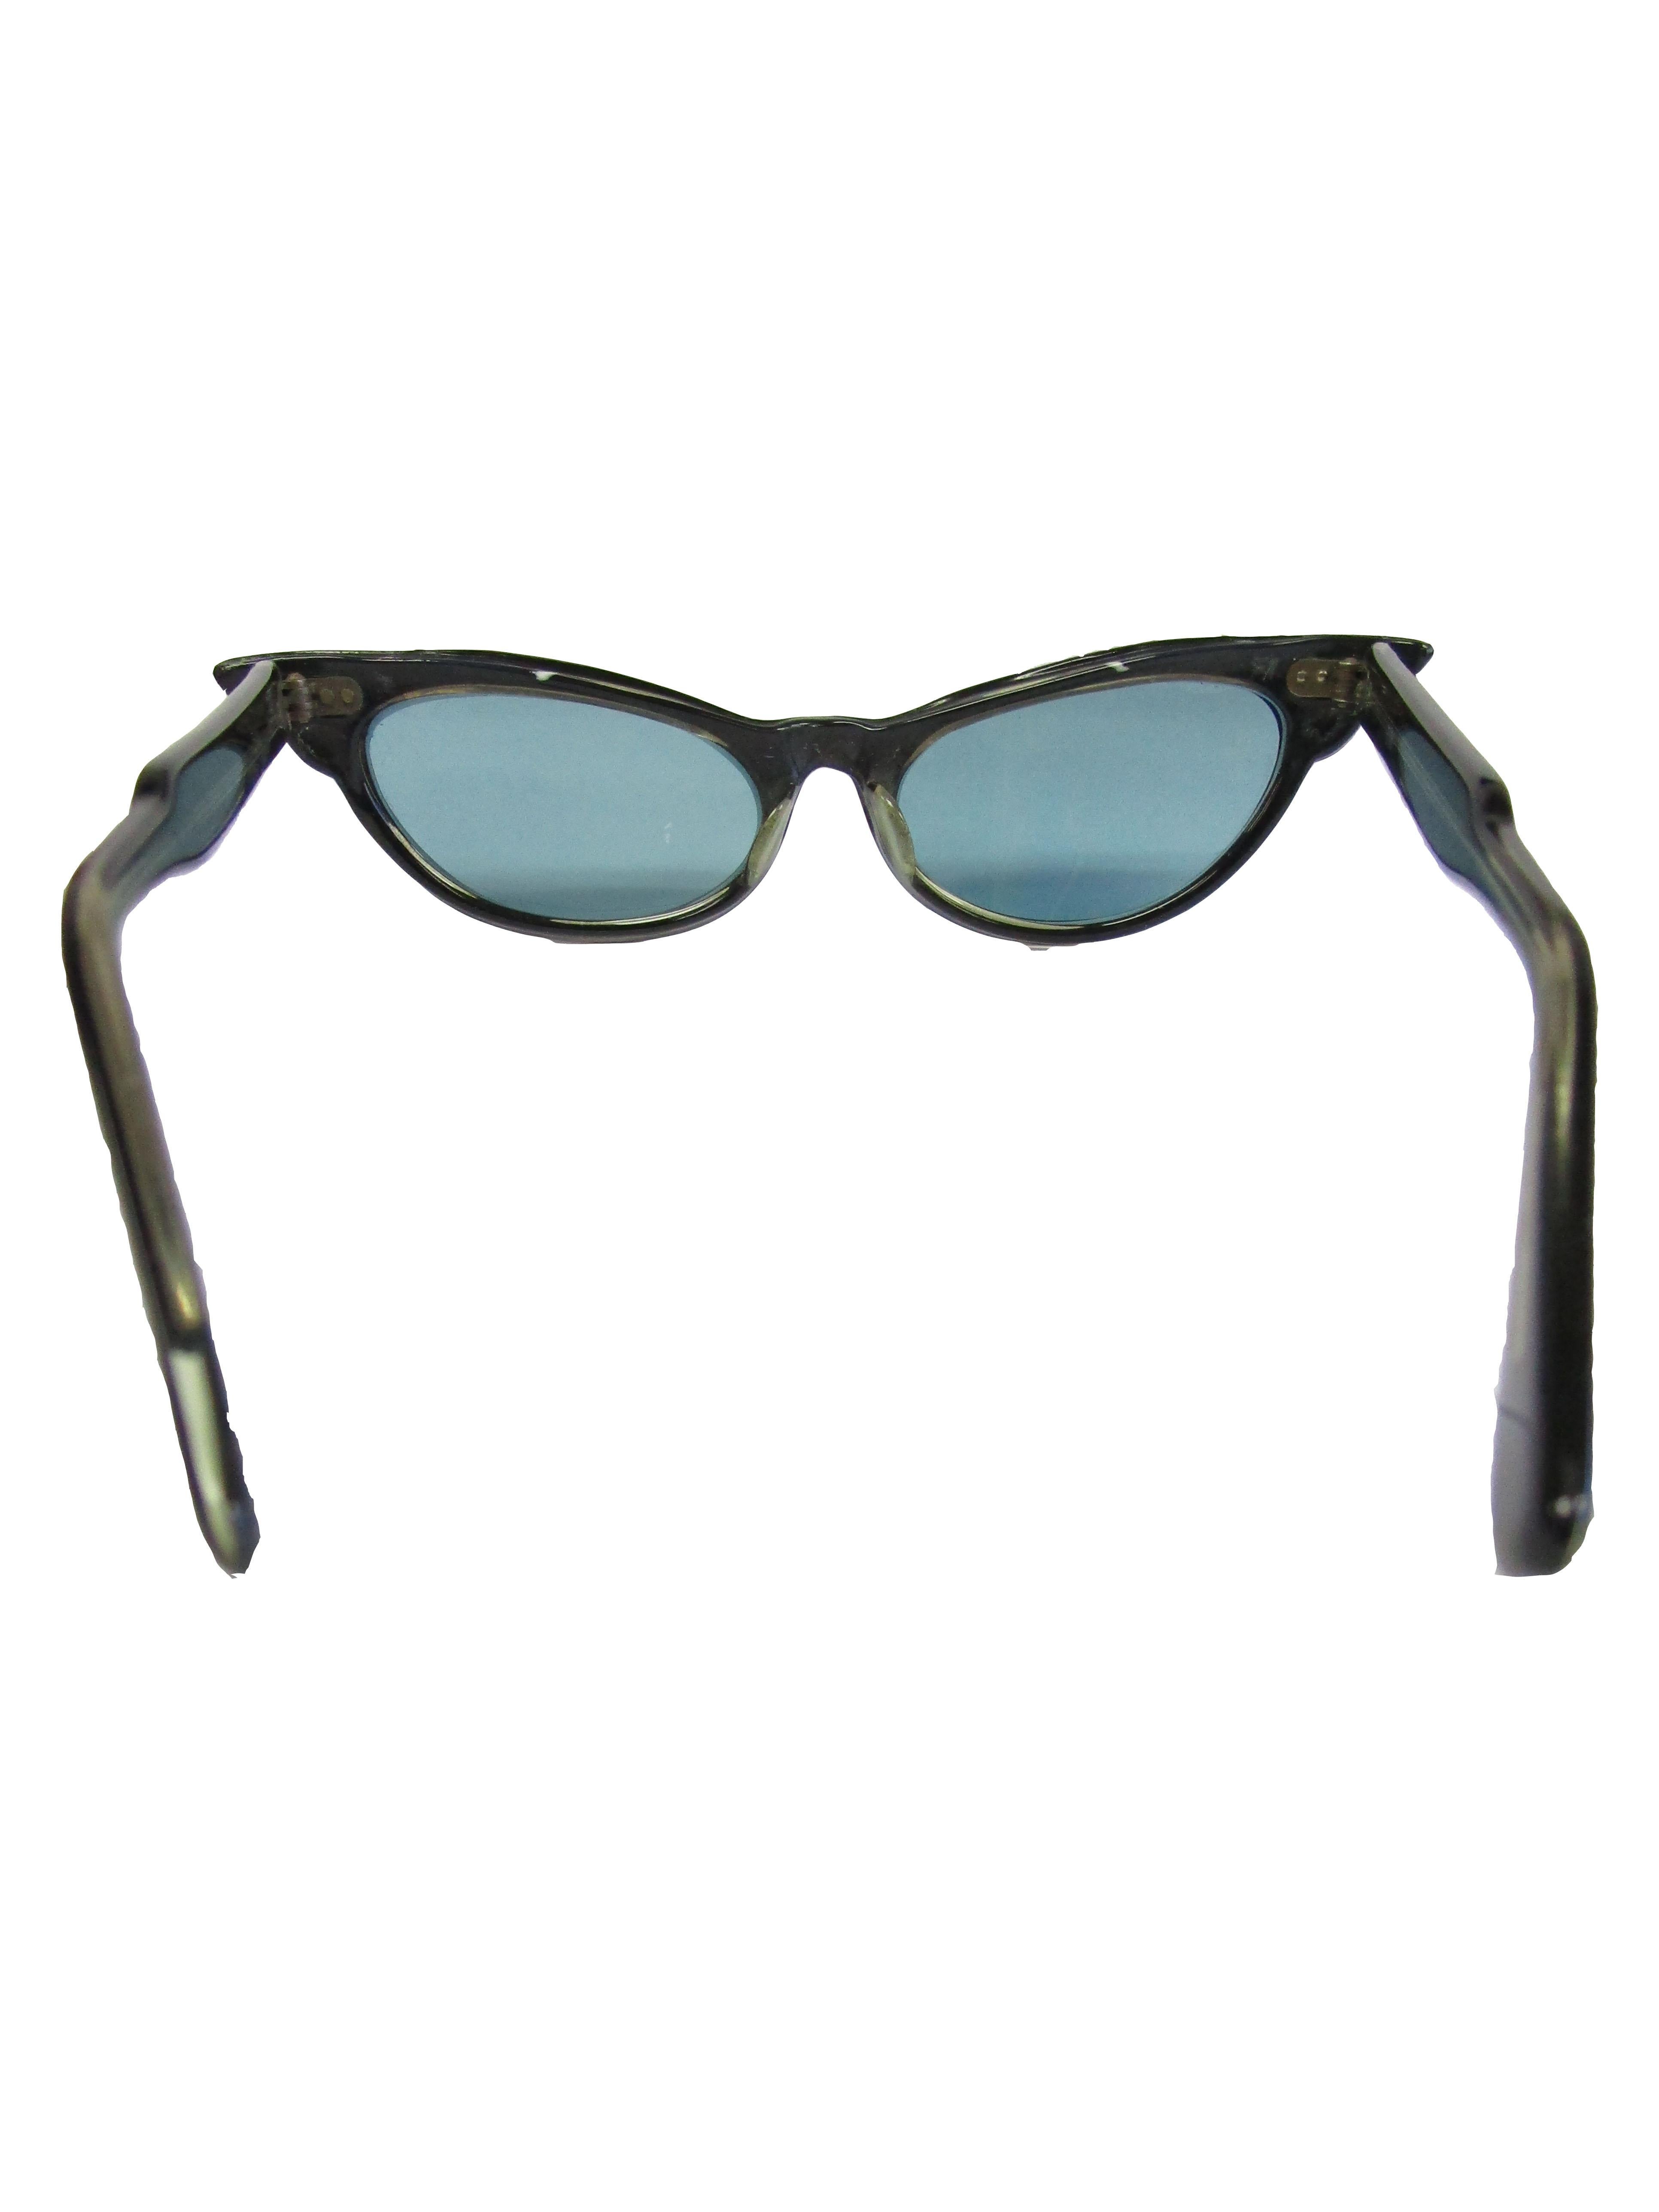 50s cat eye sunglasses